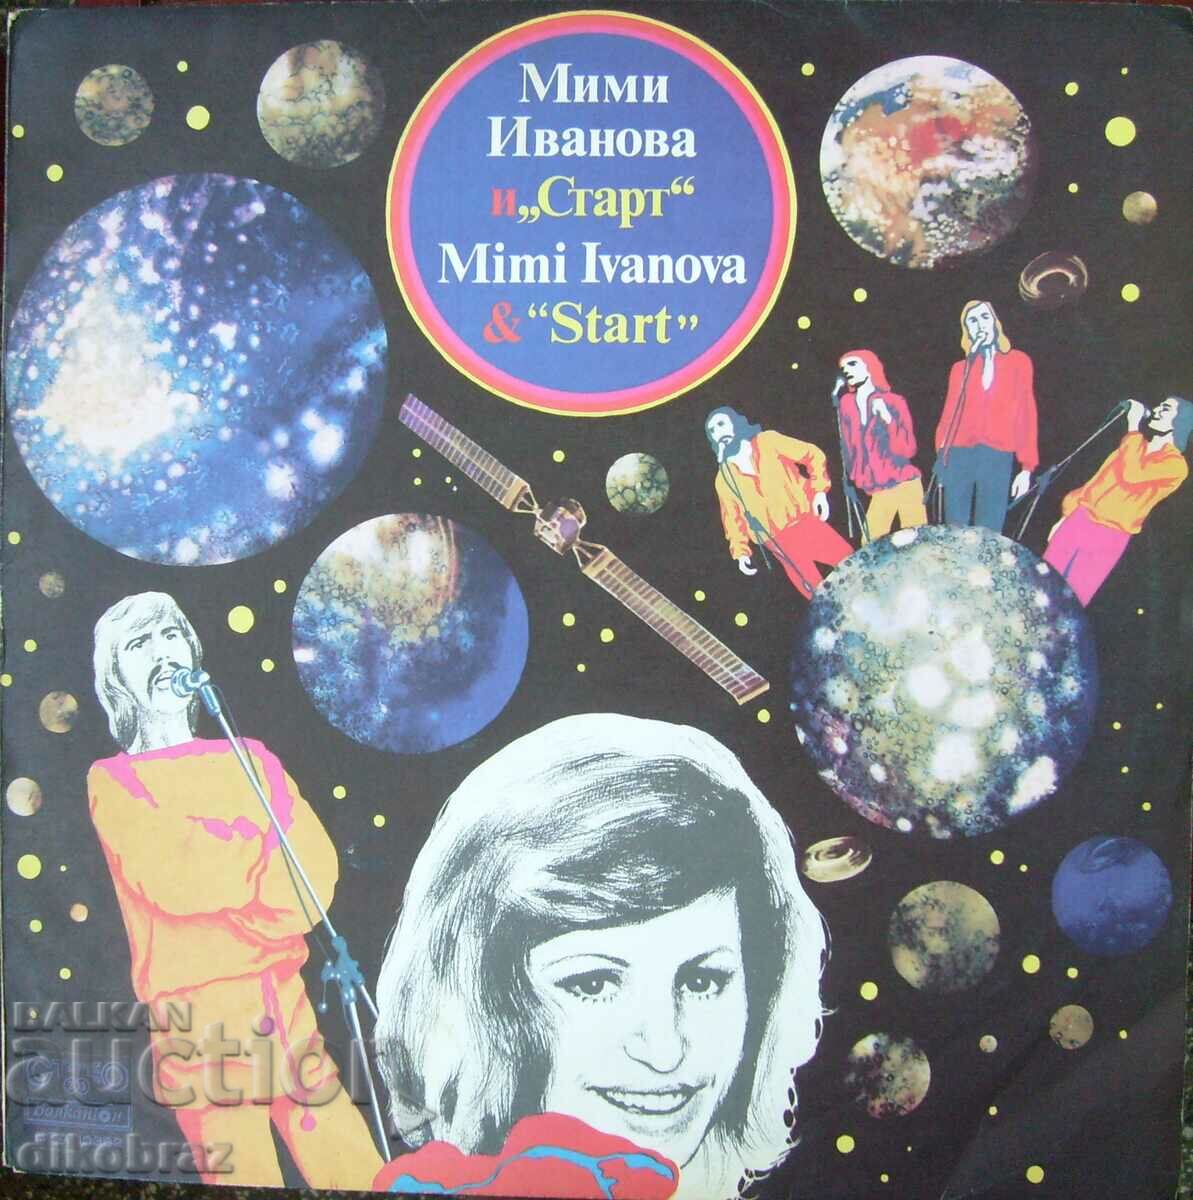 gramophone record - Mimi Ivanova and "Start" - 1979 No. 10382